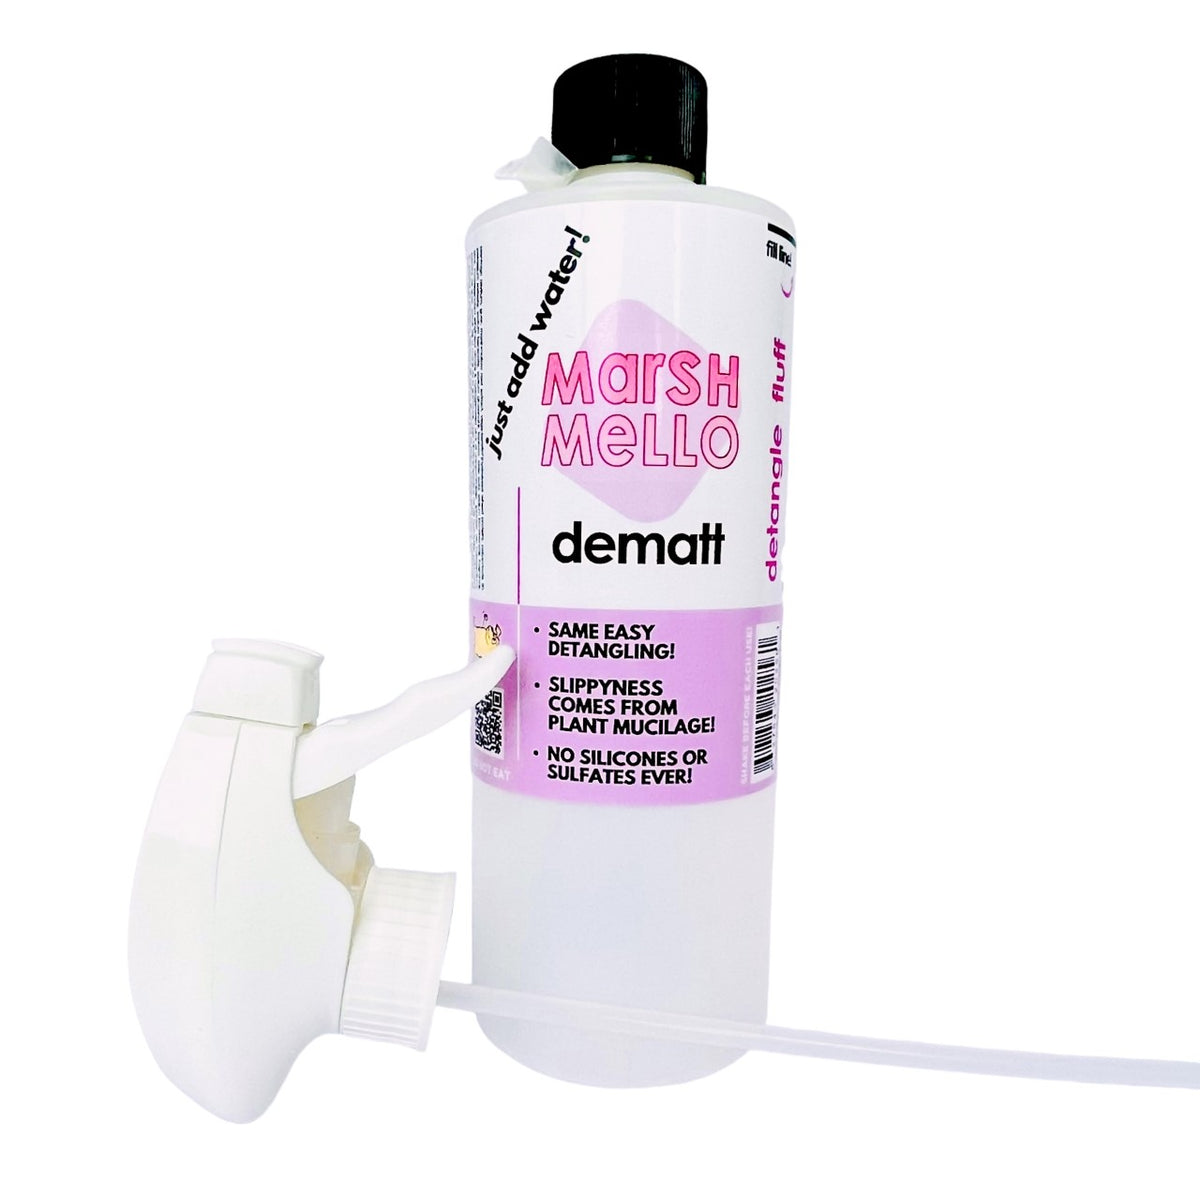 NEW!  MarshMello 2.0 Dematt Spray! - 17oz. size!  Just Add Water!